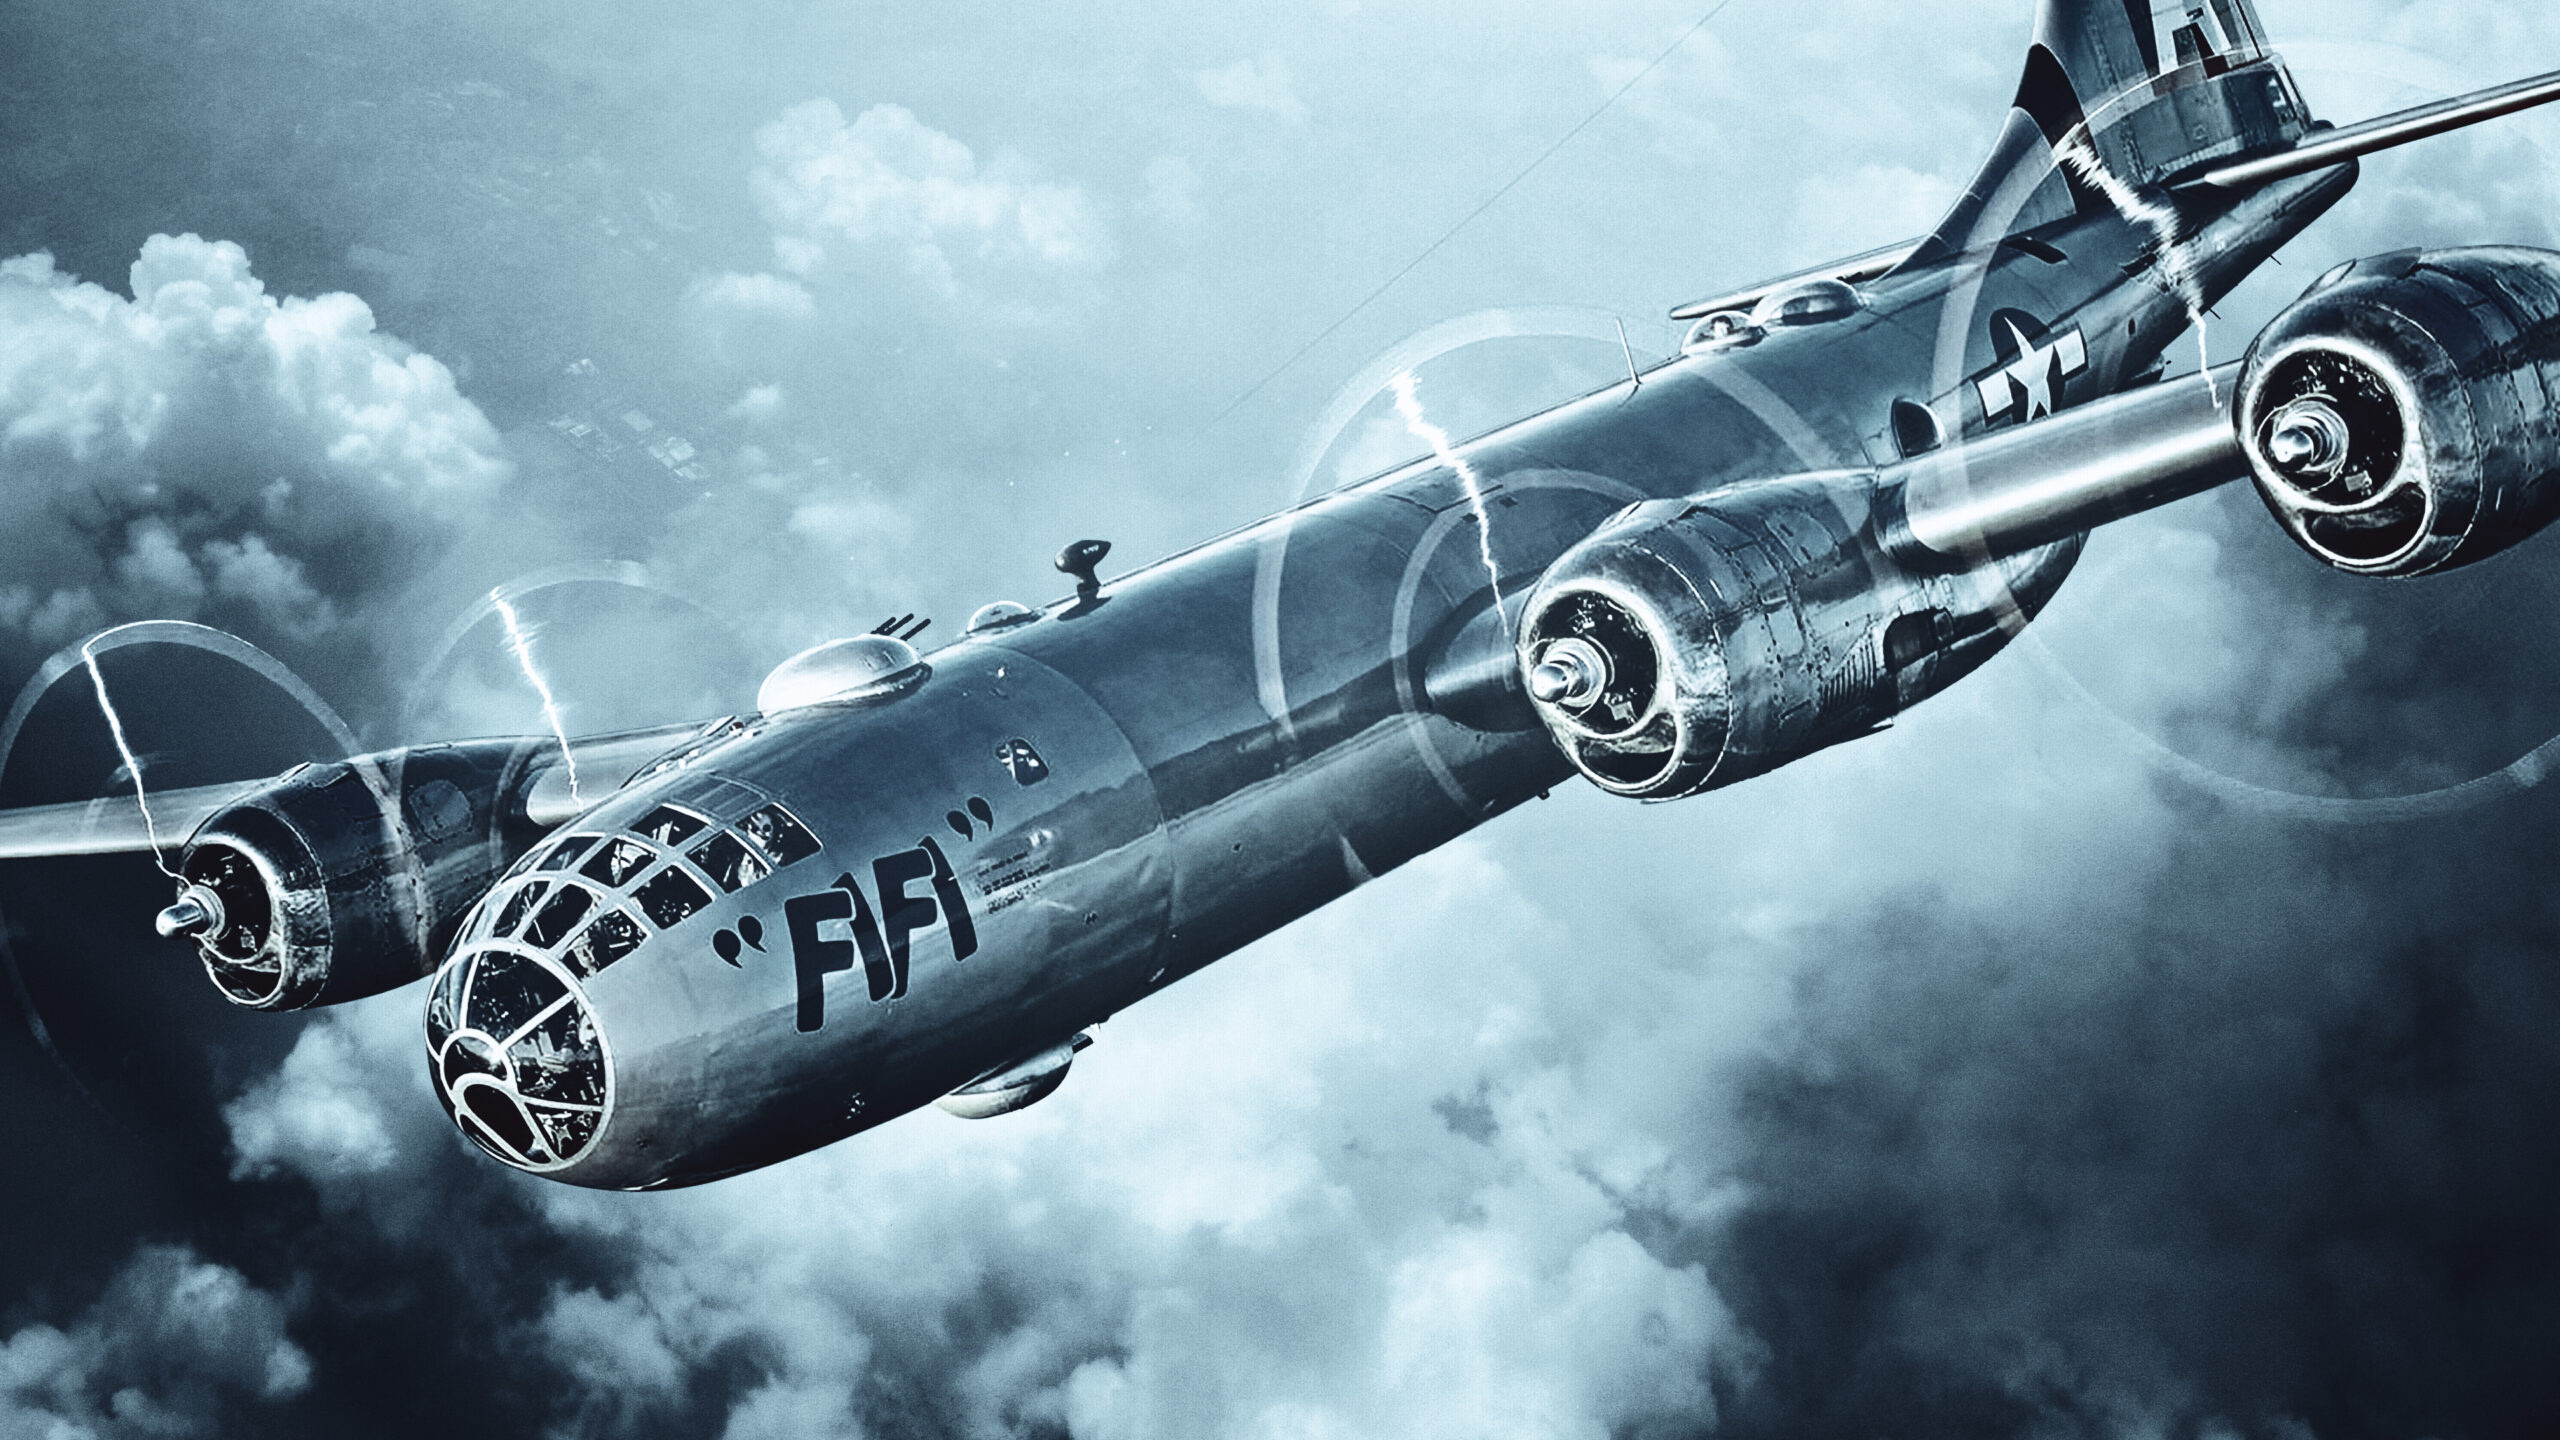 Boeing Superfortress B-29, Fighter pilot podcast, Aviation history, Legendary aircraft, 2560x1440 HD Desktop